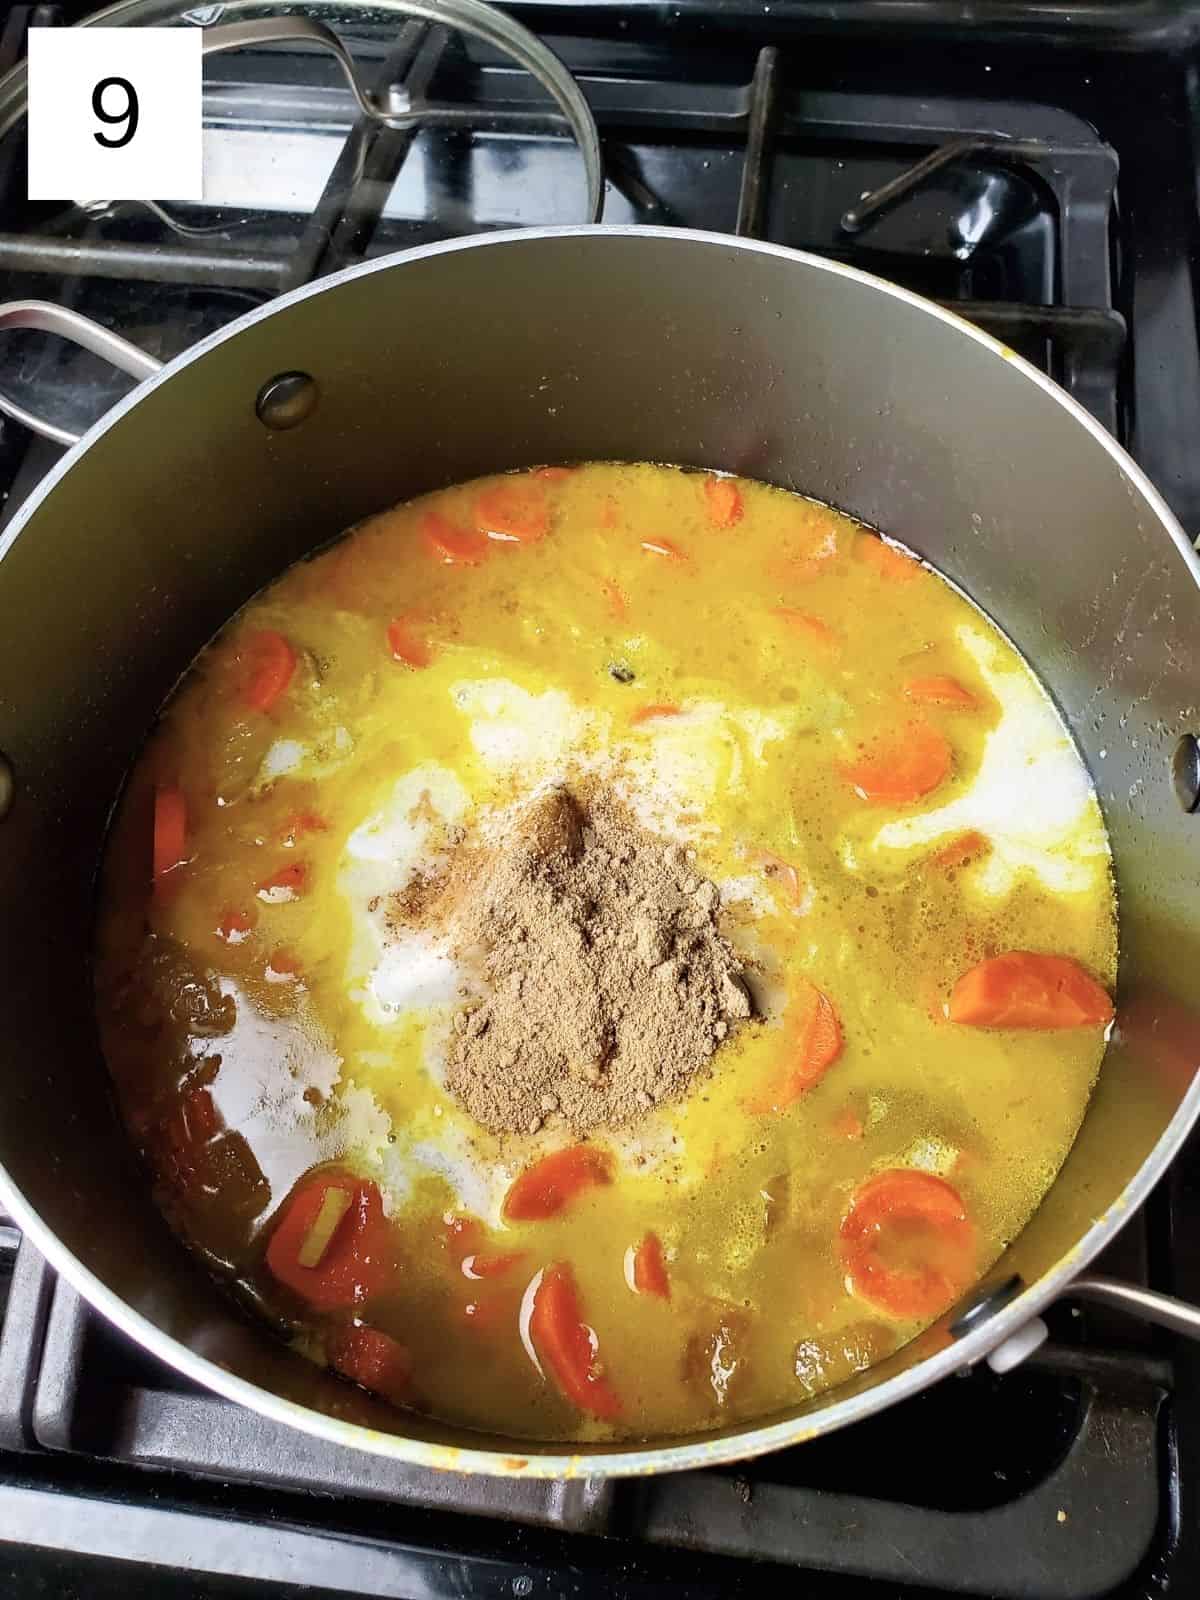 coconut milk, amchur, and salt in a pot of carrots and stock mixture.